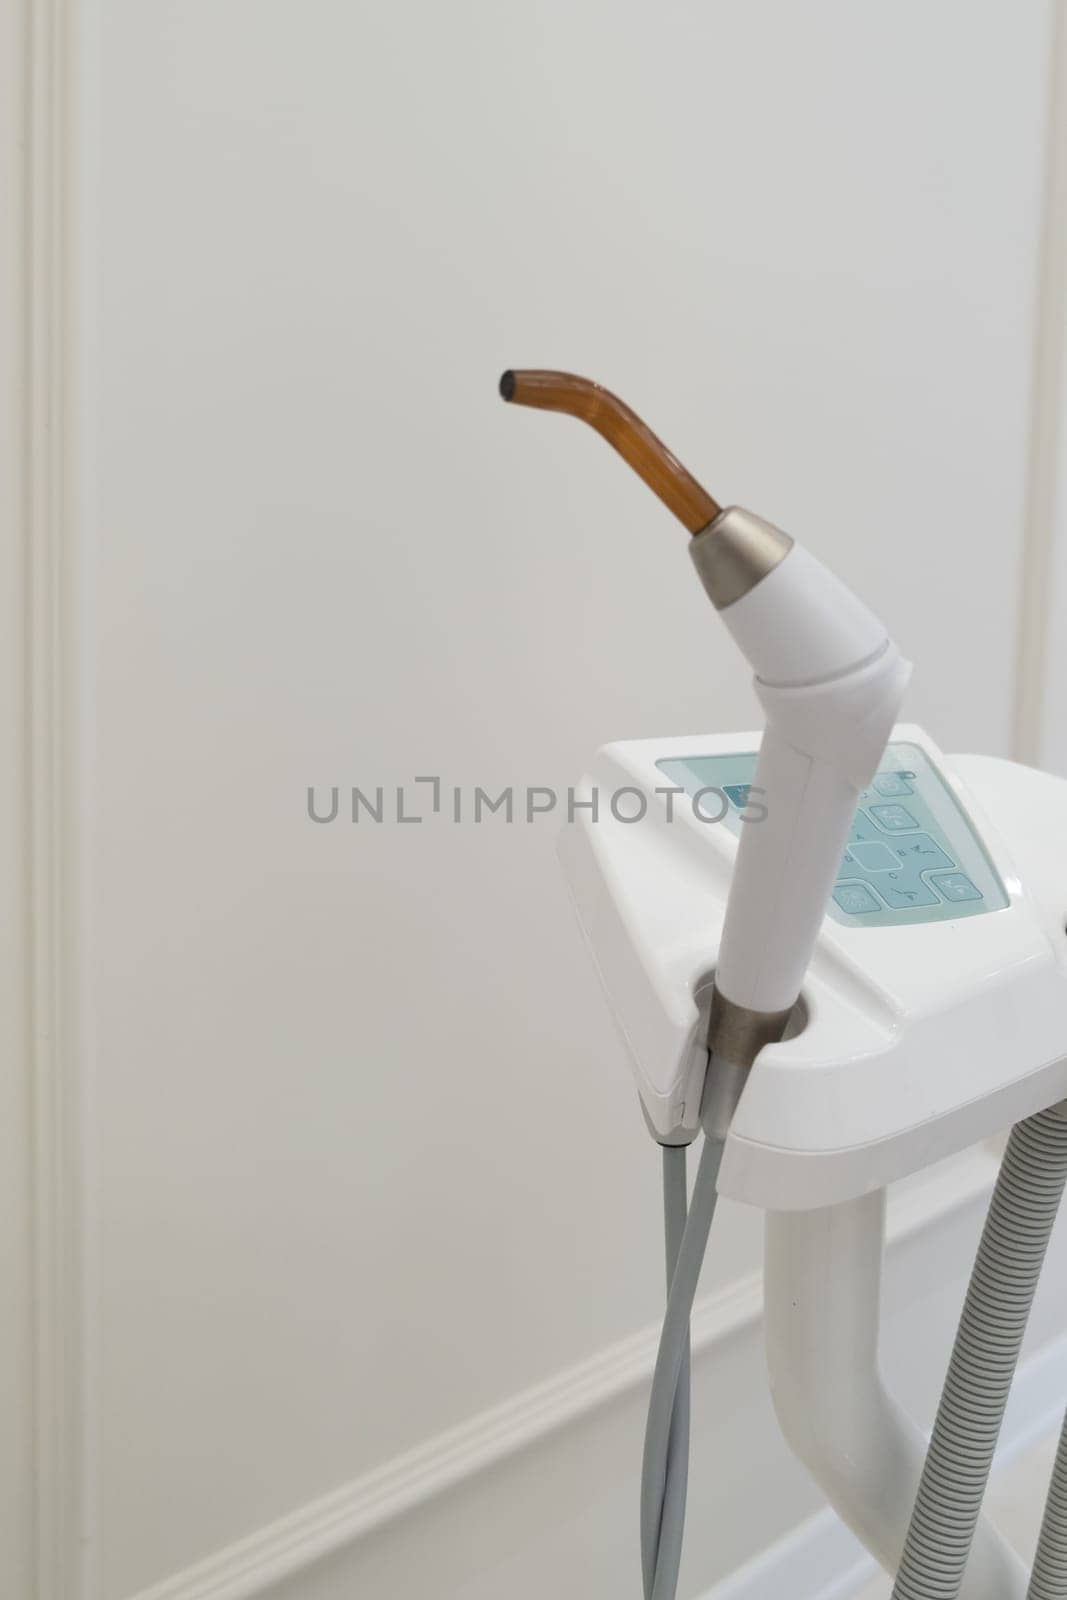 Dental UV curing lamp for polymerization of dental materials by danjelaruci